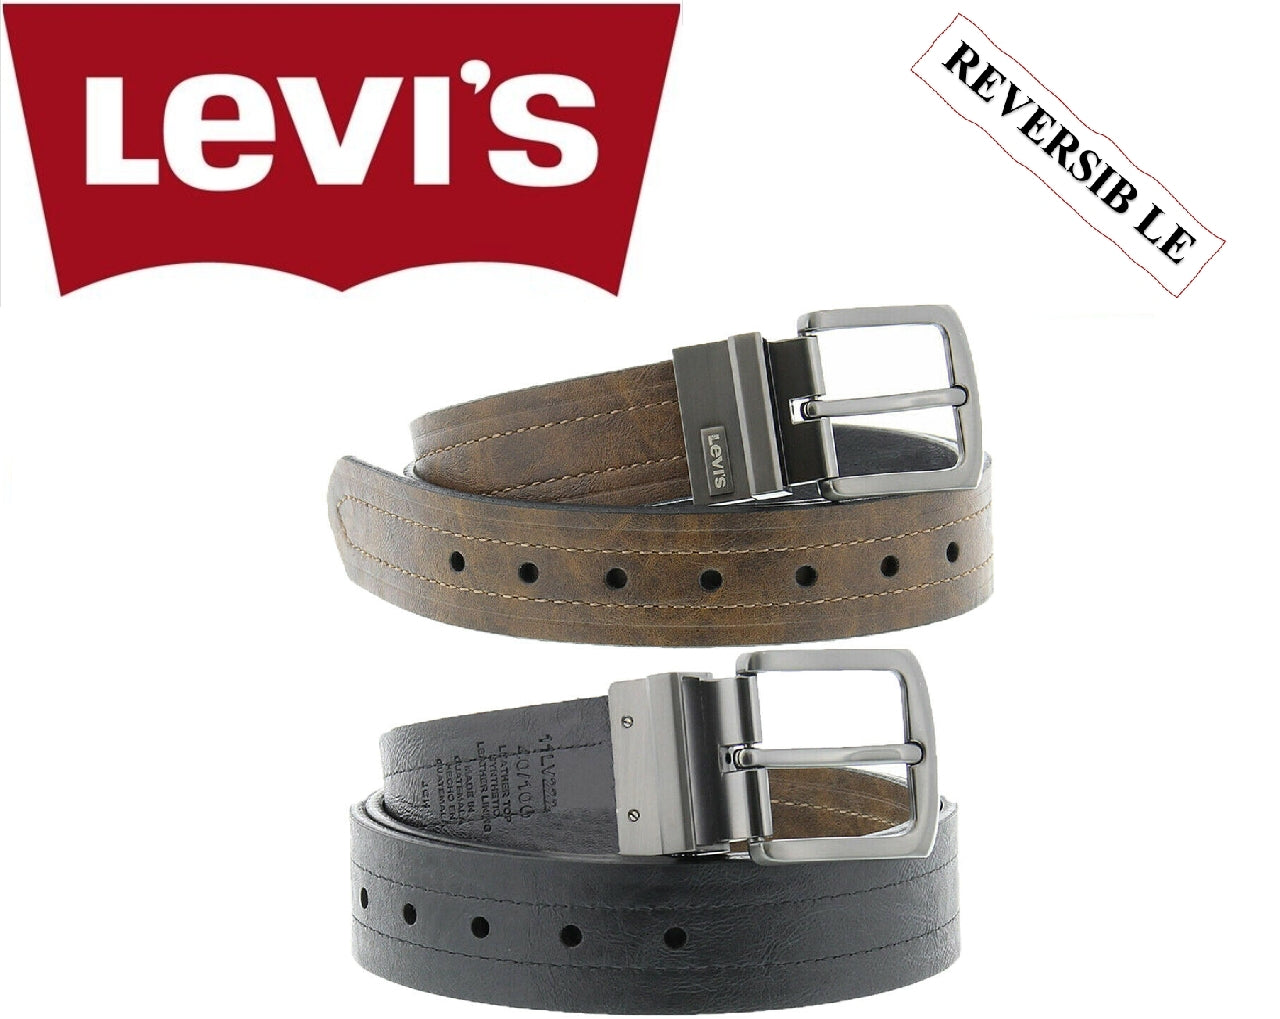 Levi's Reversible Belt - Boys, Size: Medium, Dark Brown